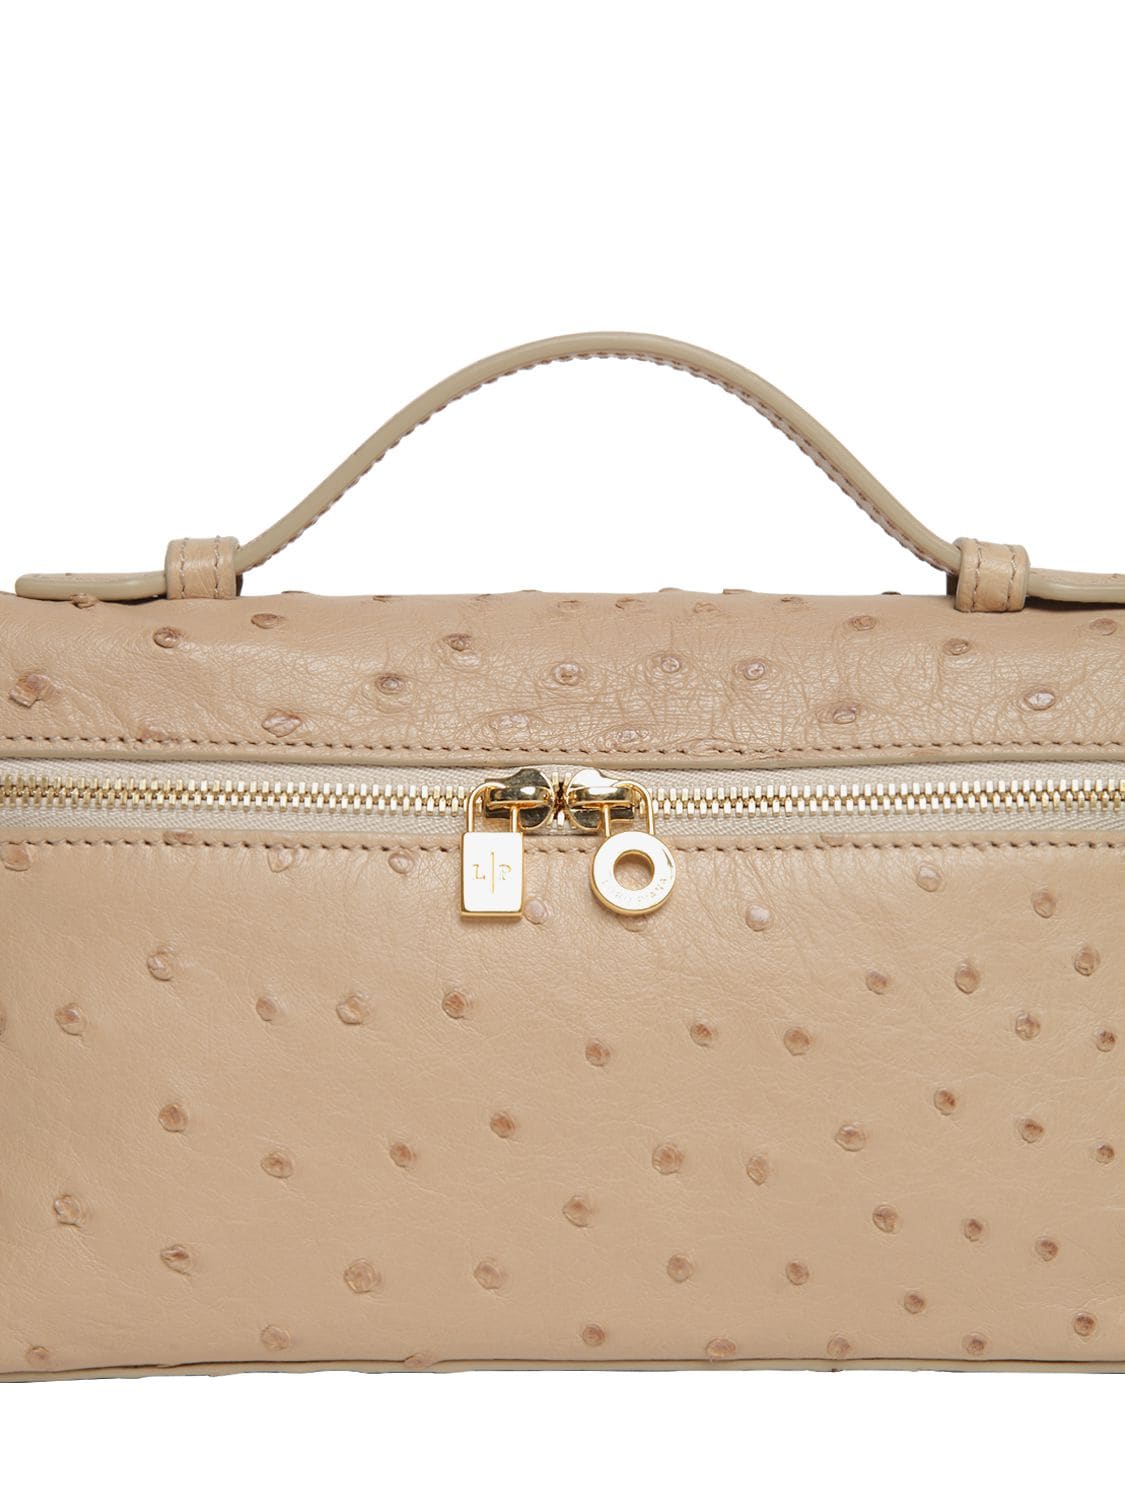 Loro Piana - Handbag Micro Bale Bag, Beige, Ostrich Leather, One-Size